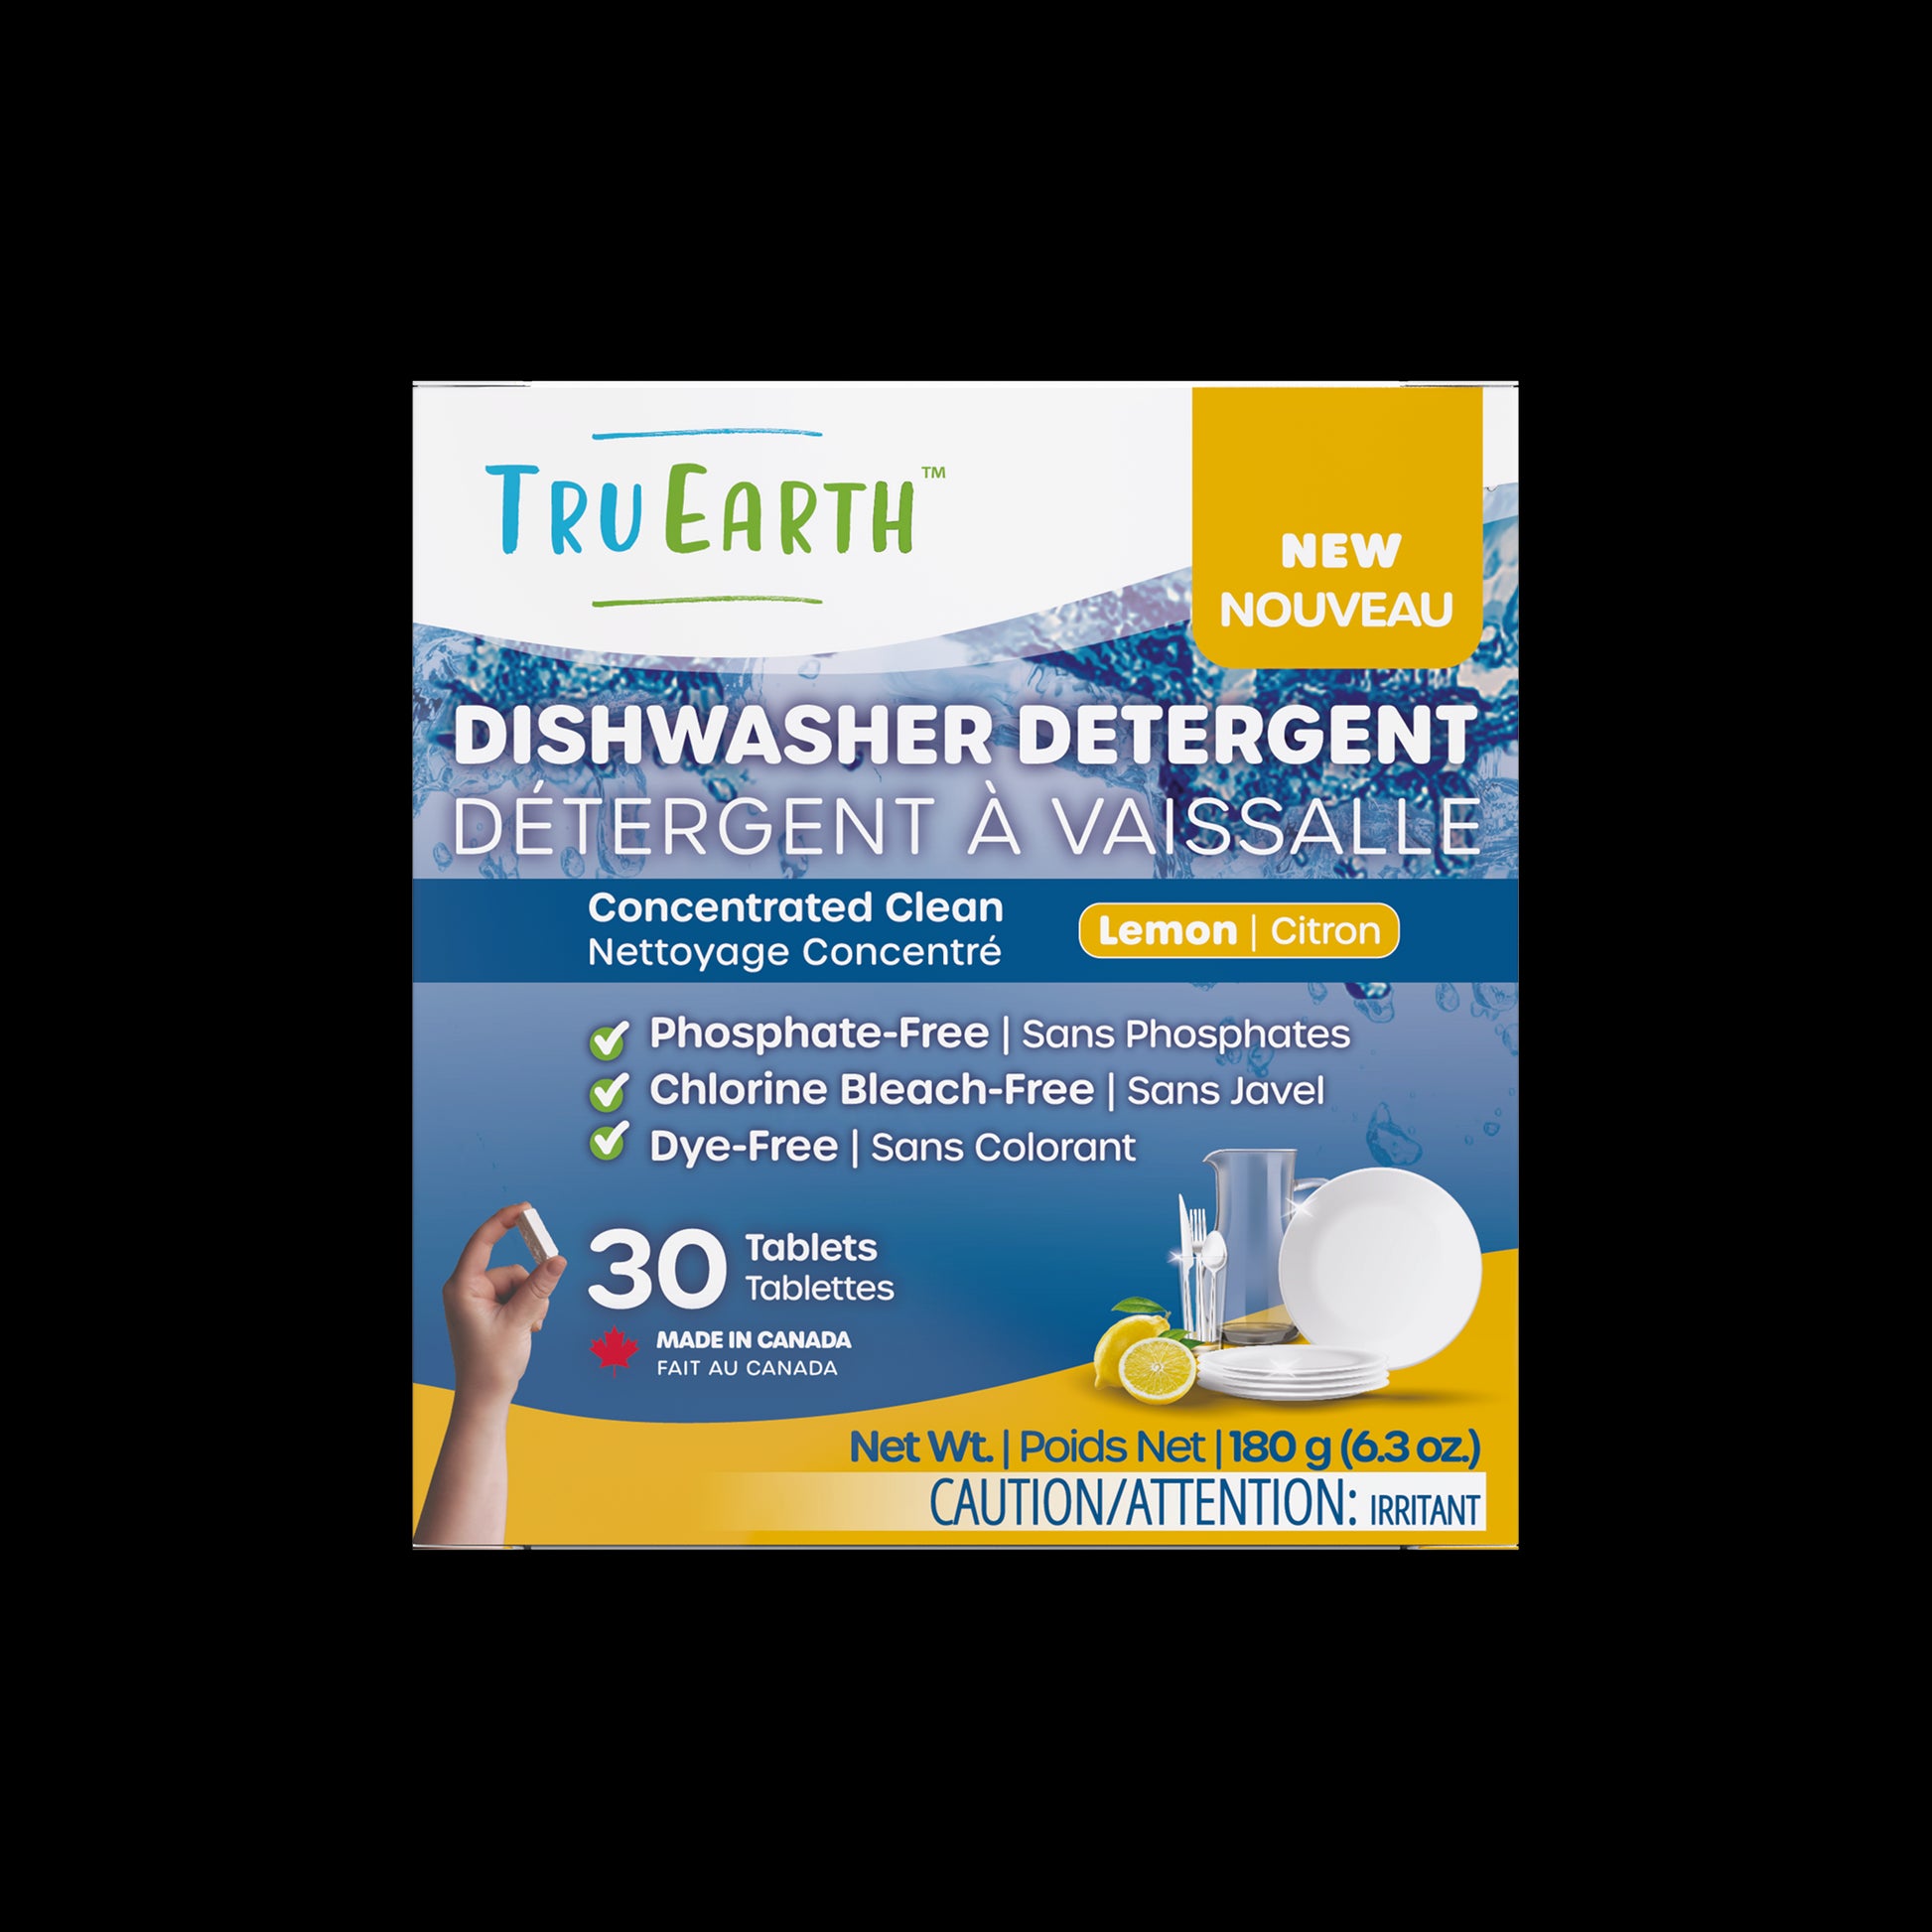 TruEarth Dishwasher Detergent Lemon Front of Package